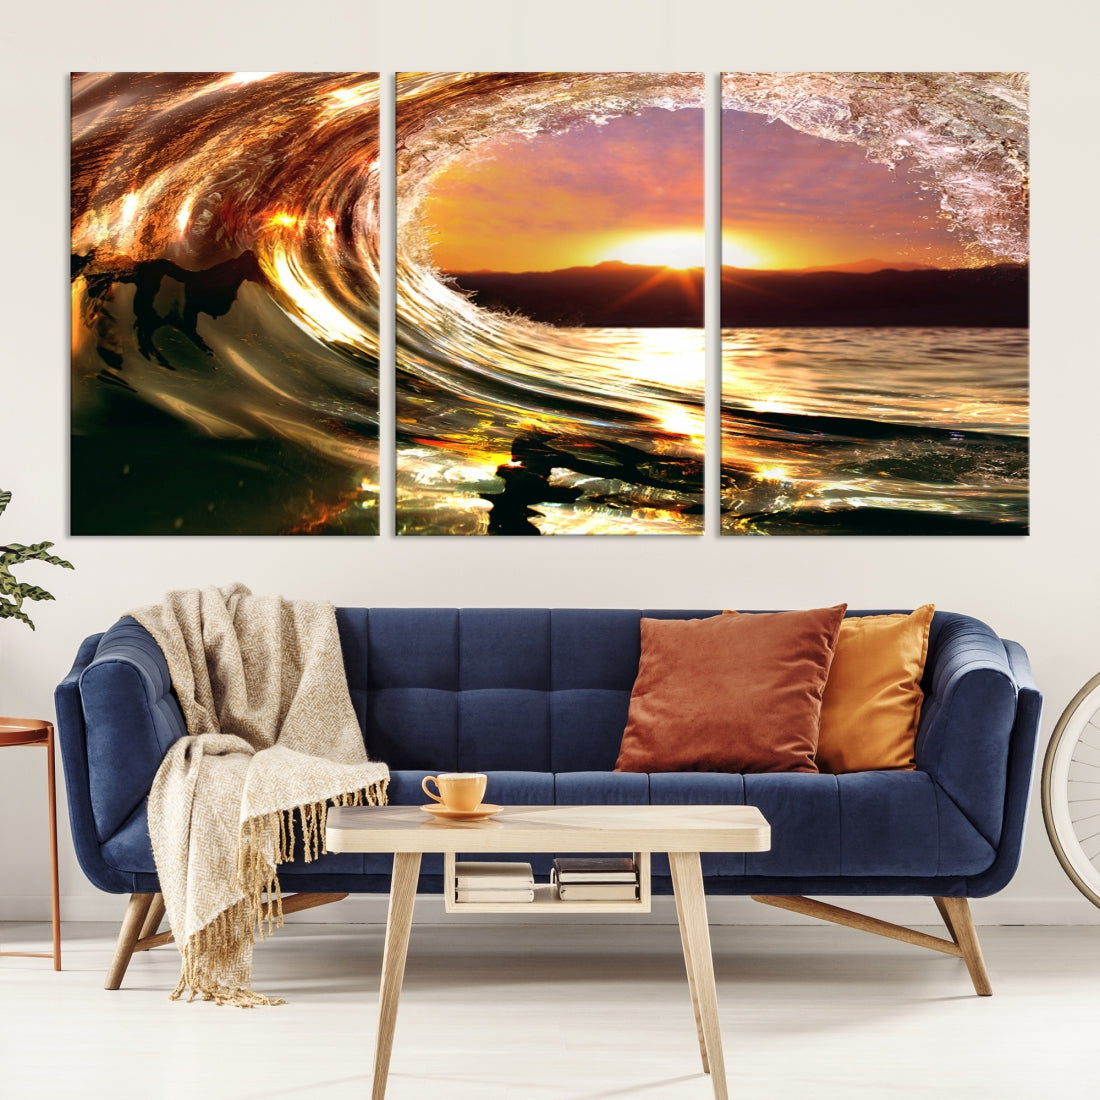 Ocean Waves Crash Under Radiant Sun Wall Art Canvas Print